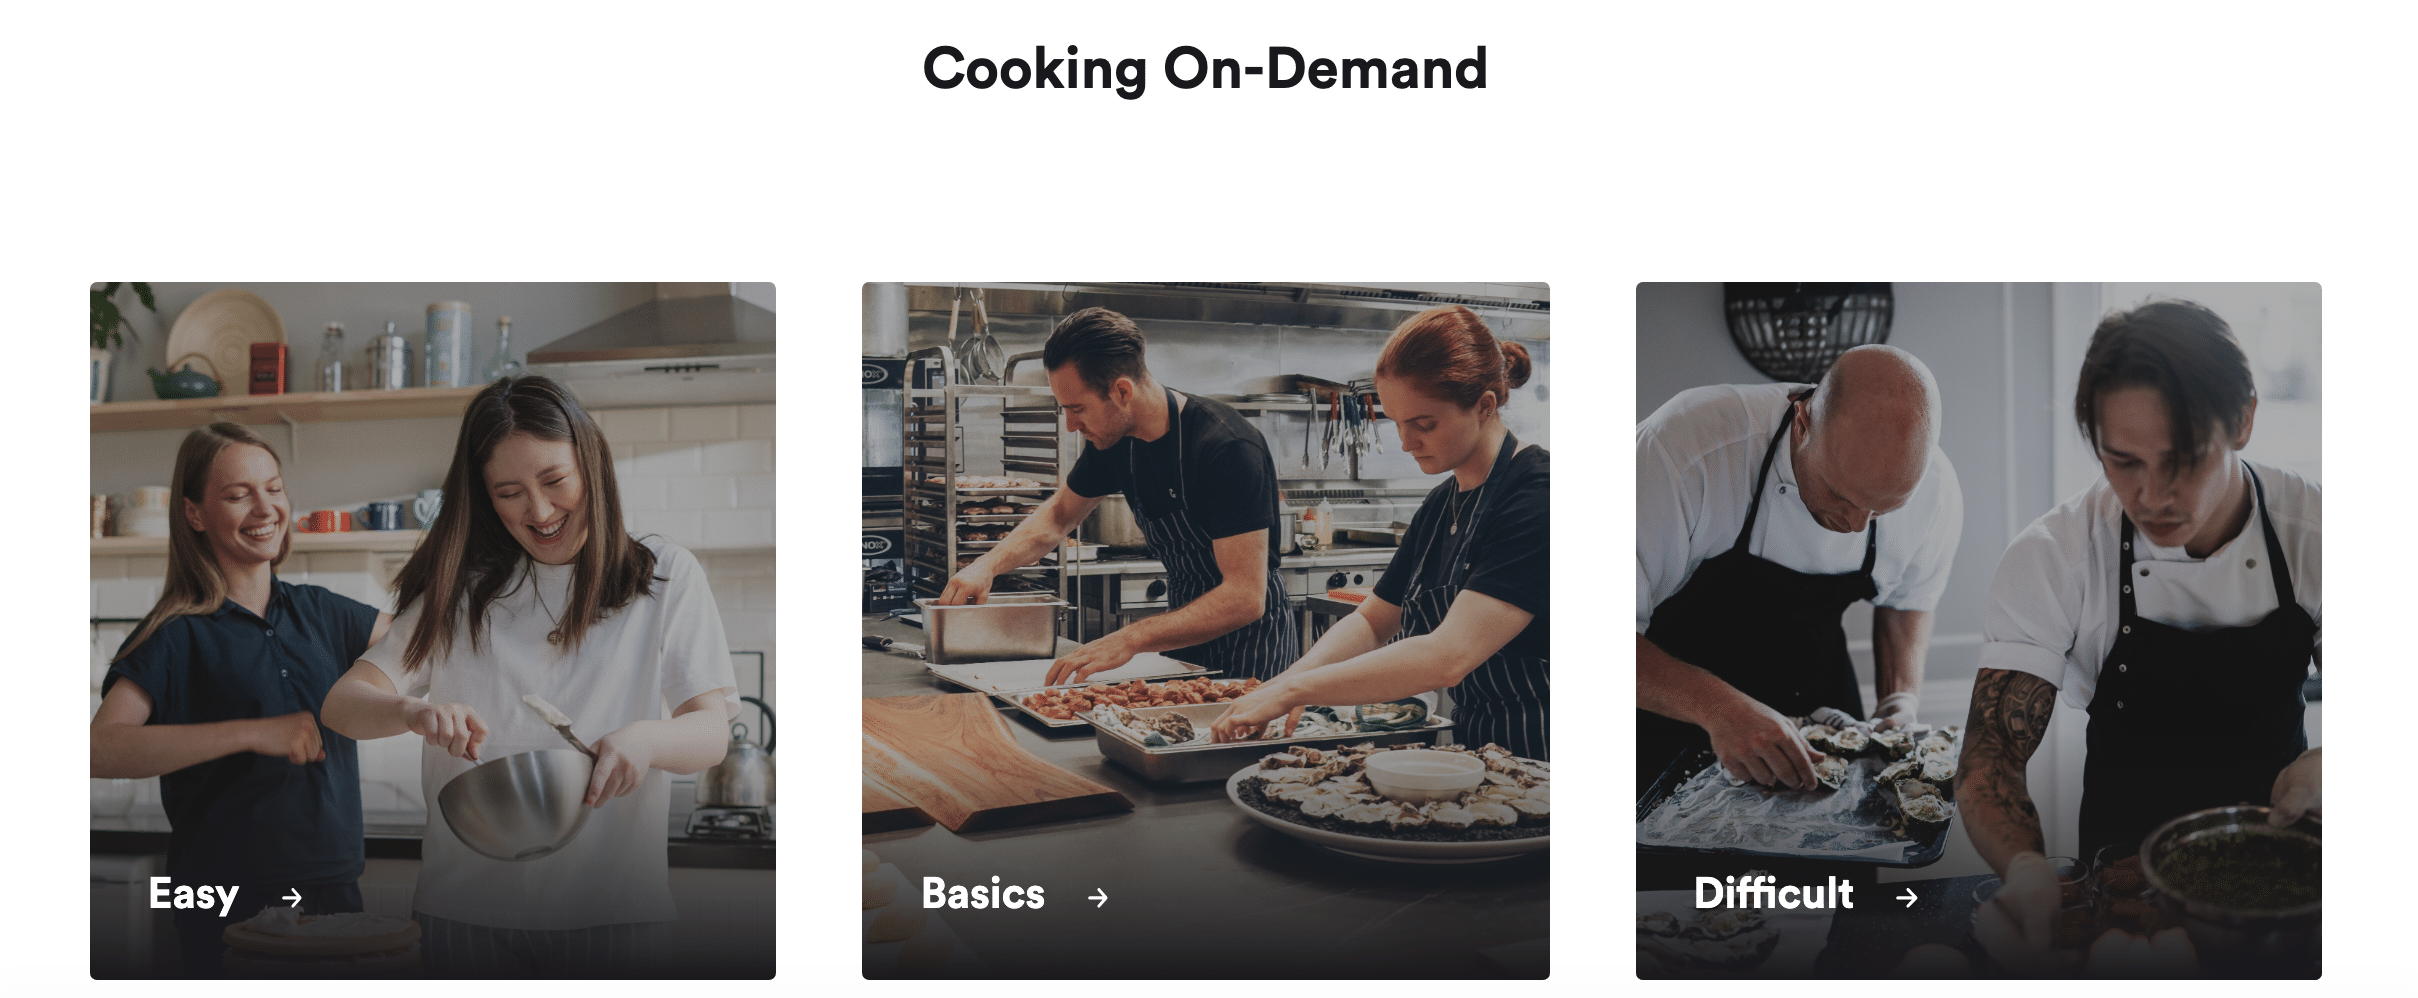 Cooking on demand - Start an Online Training Business